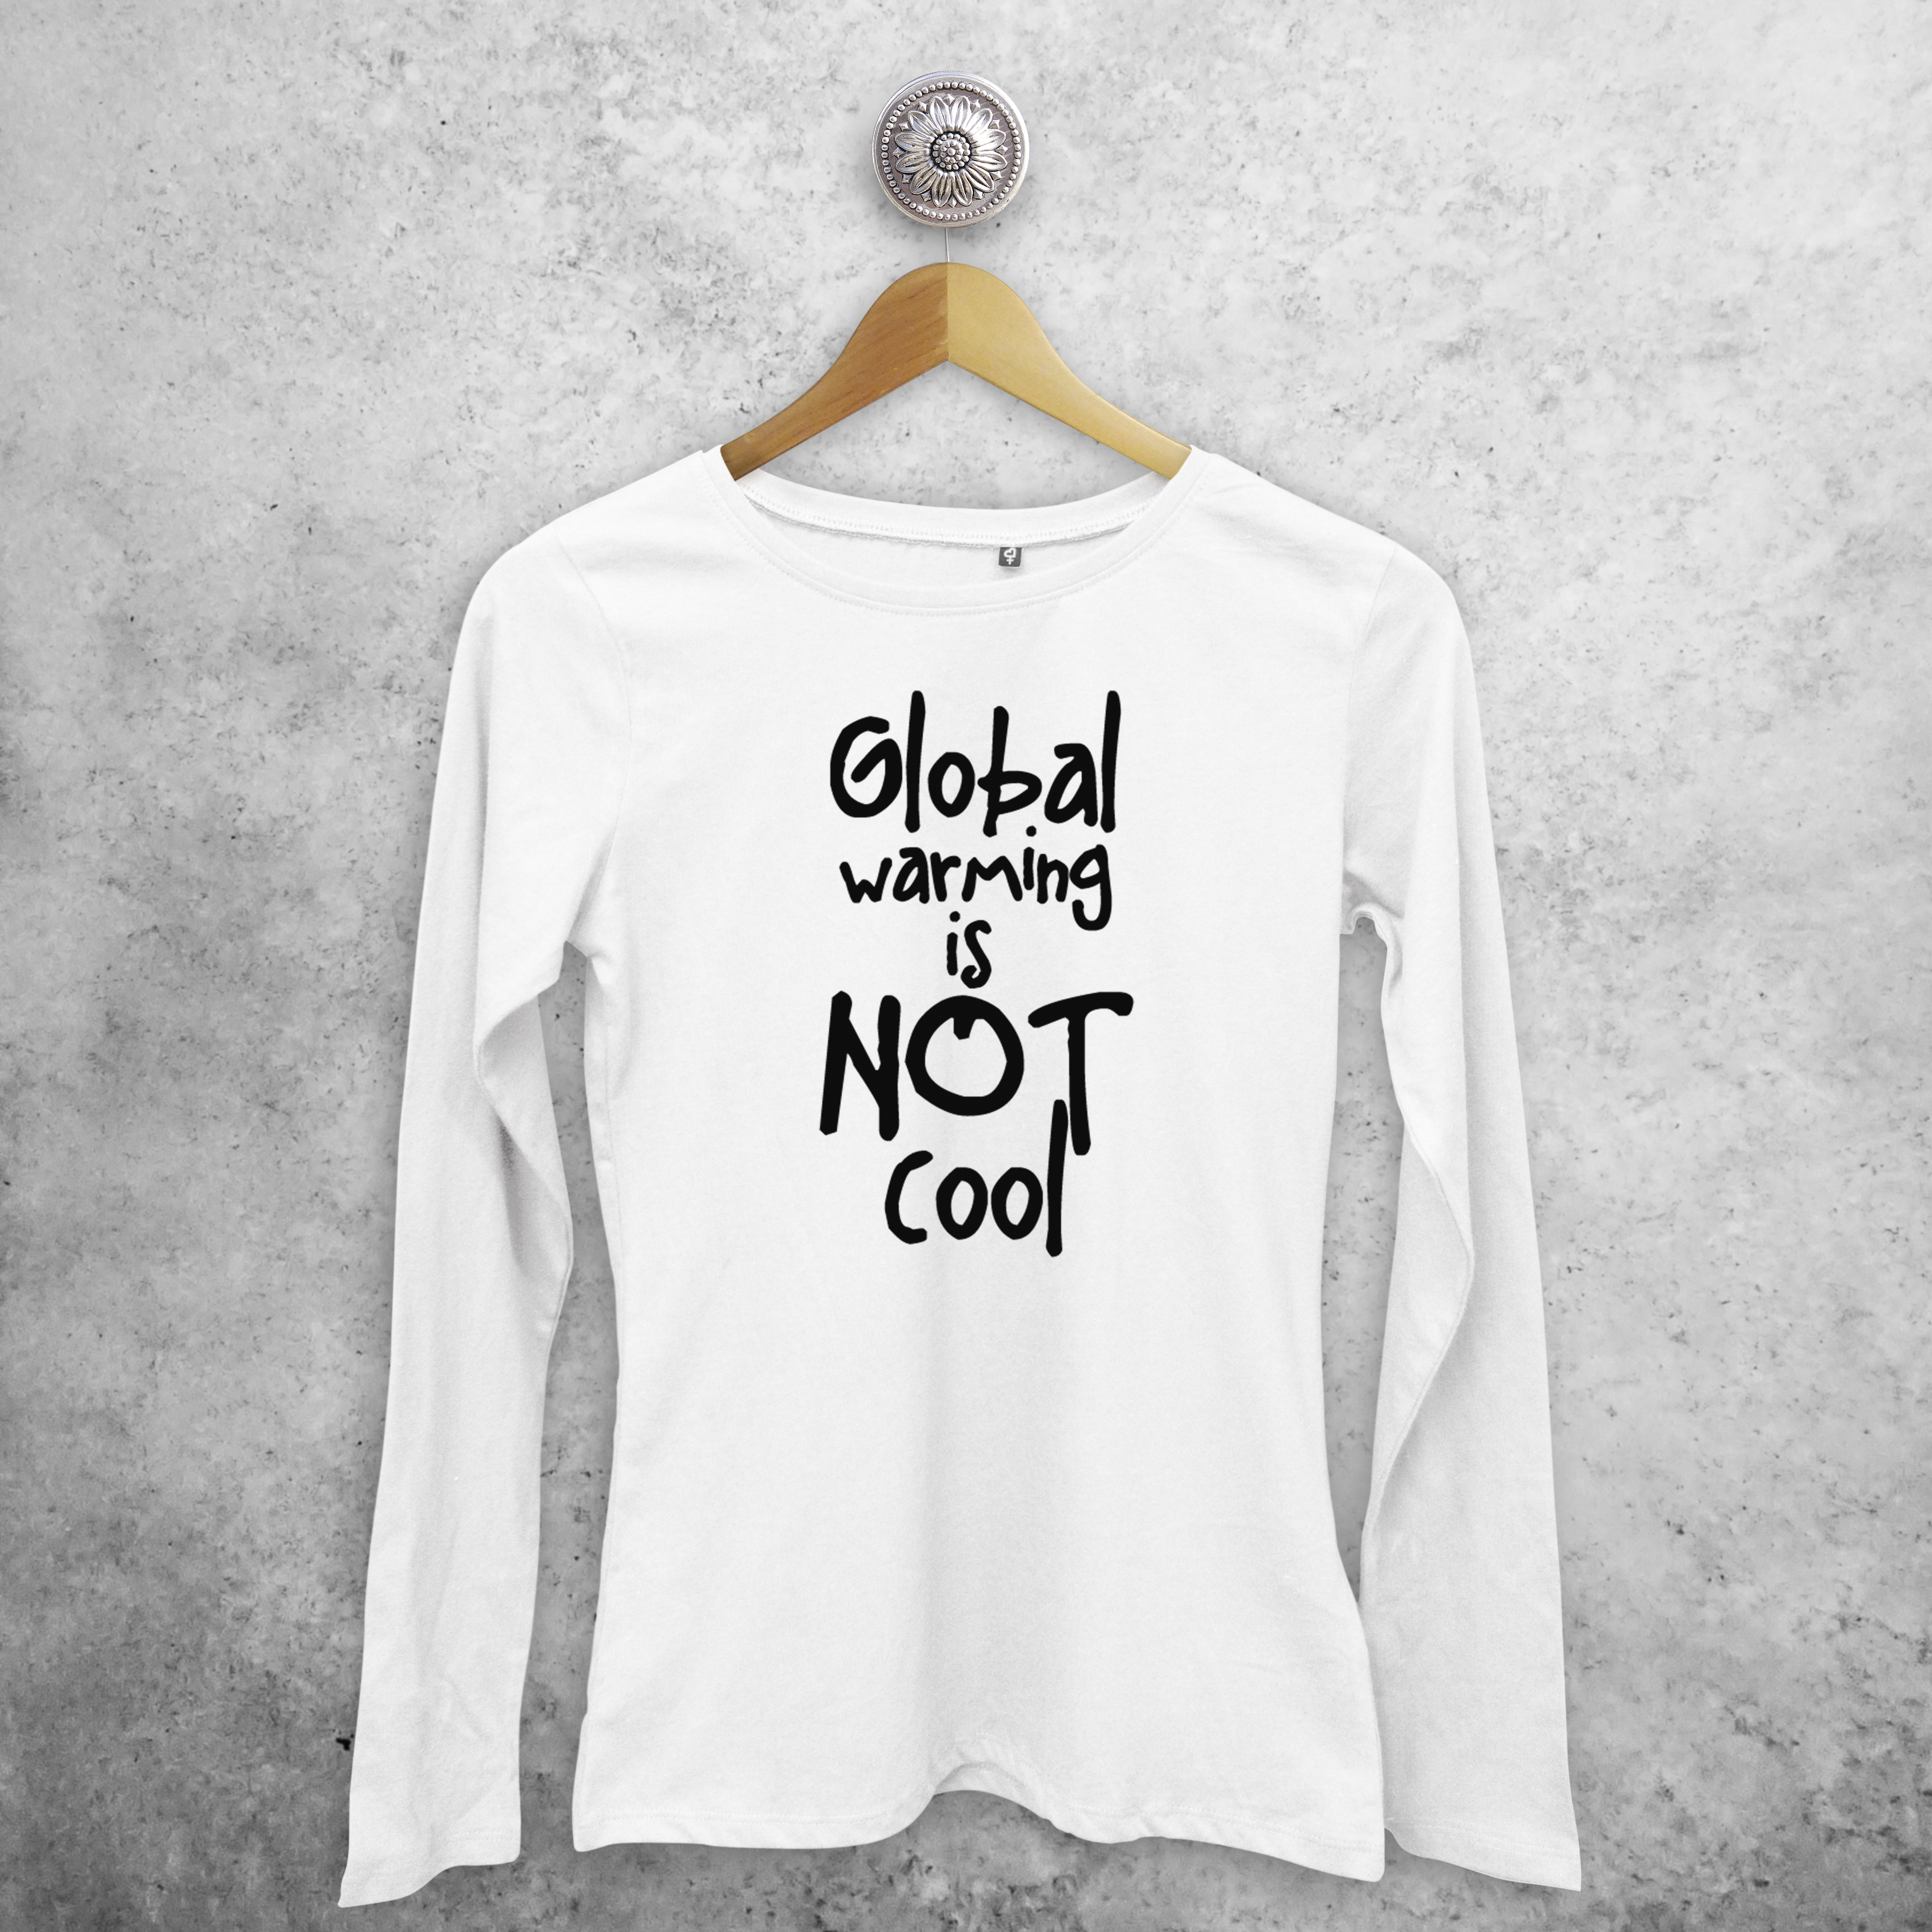 'Global warming is not cool' adult longsleeve shirt